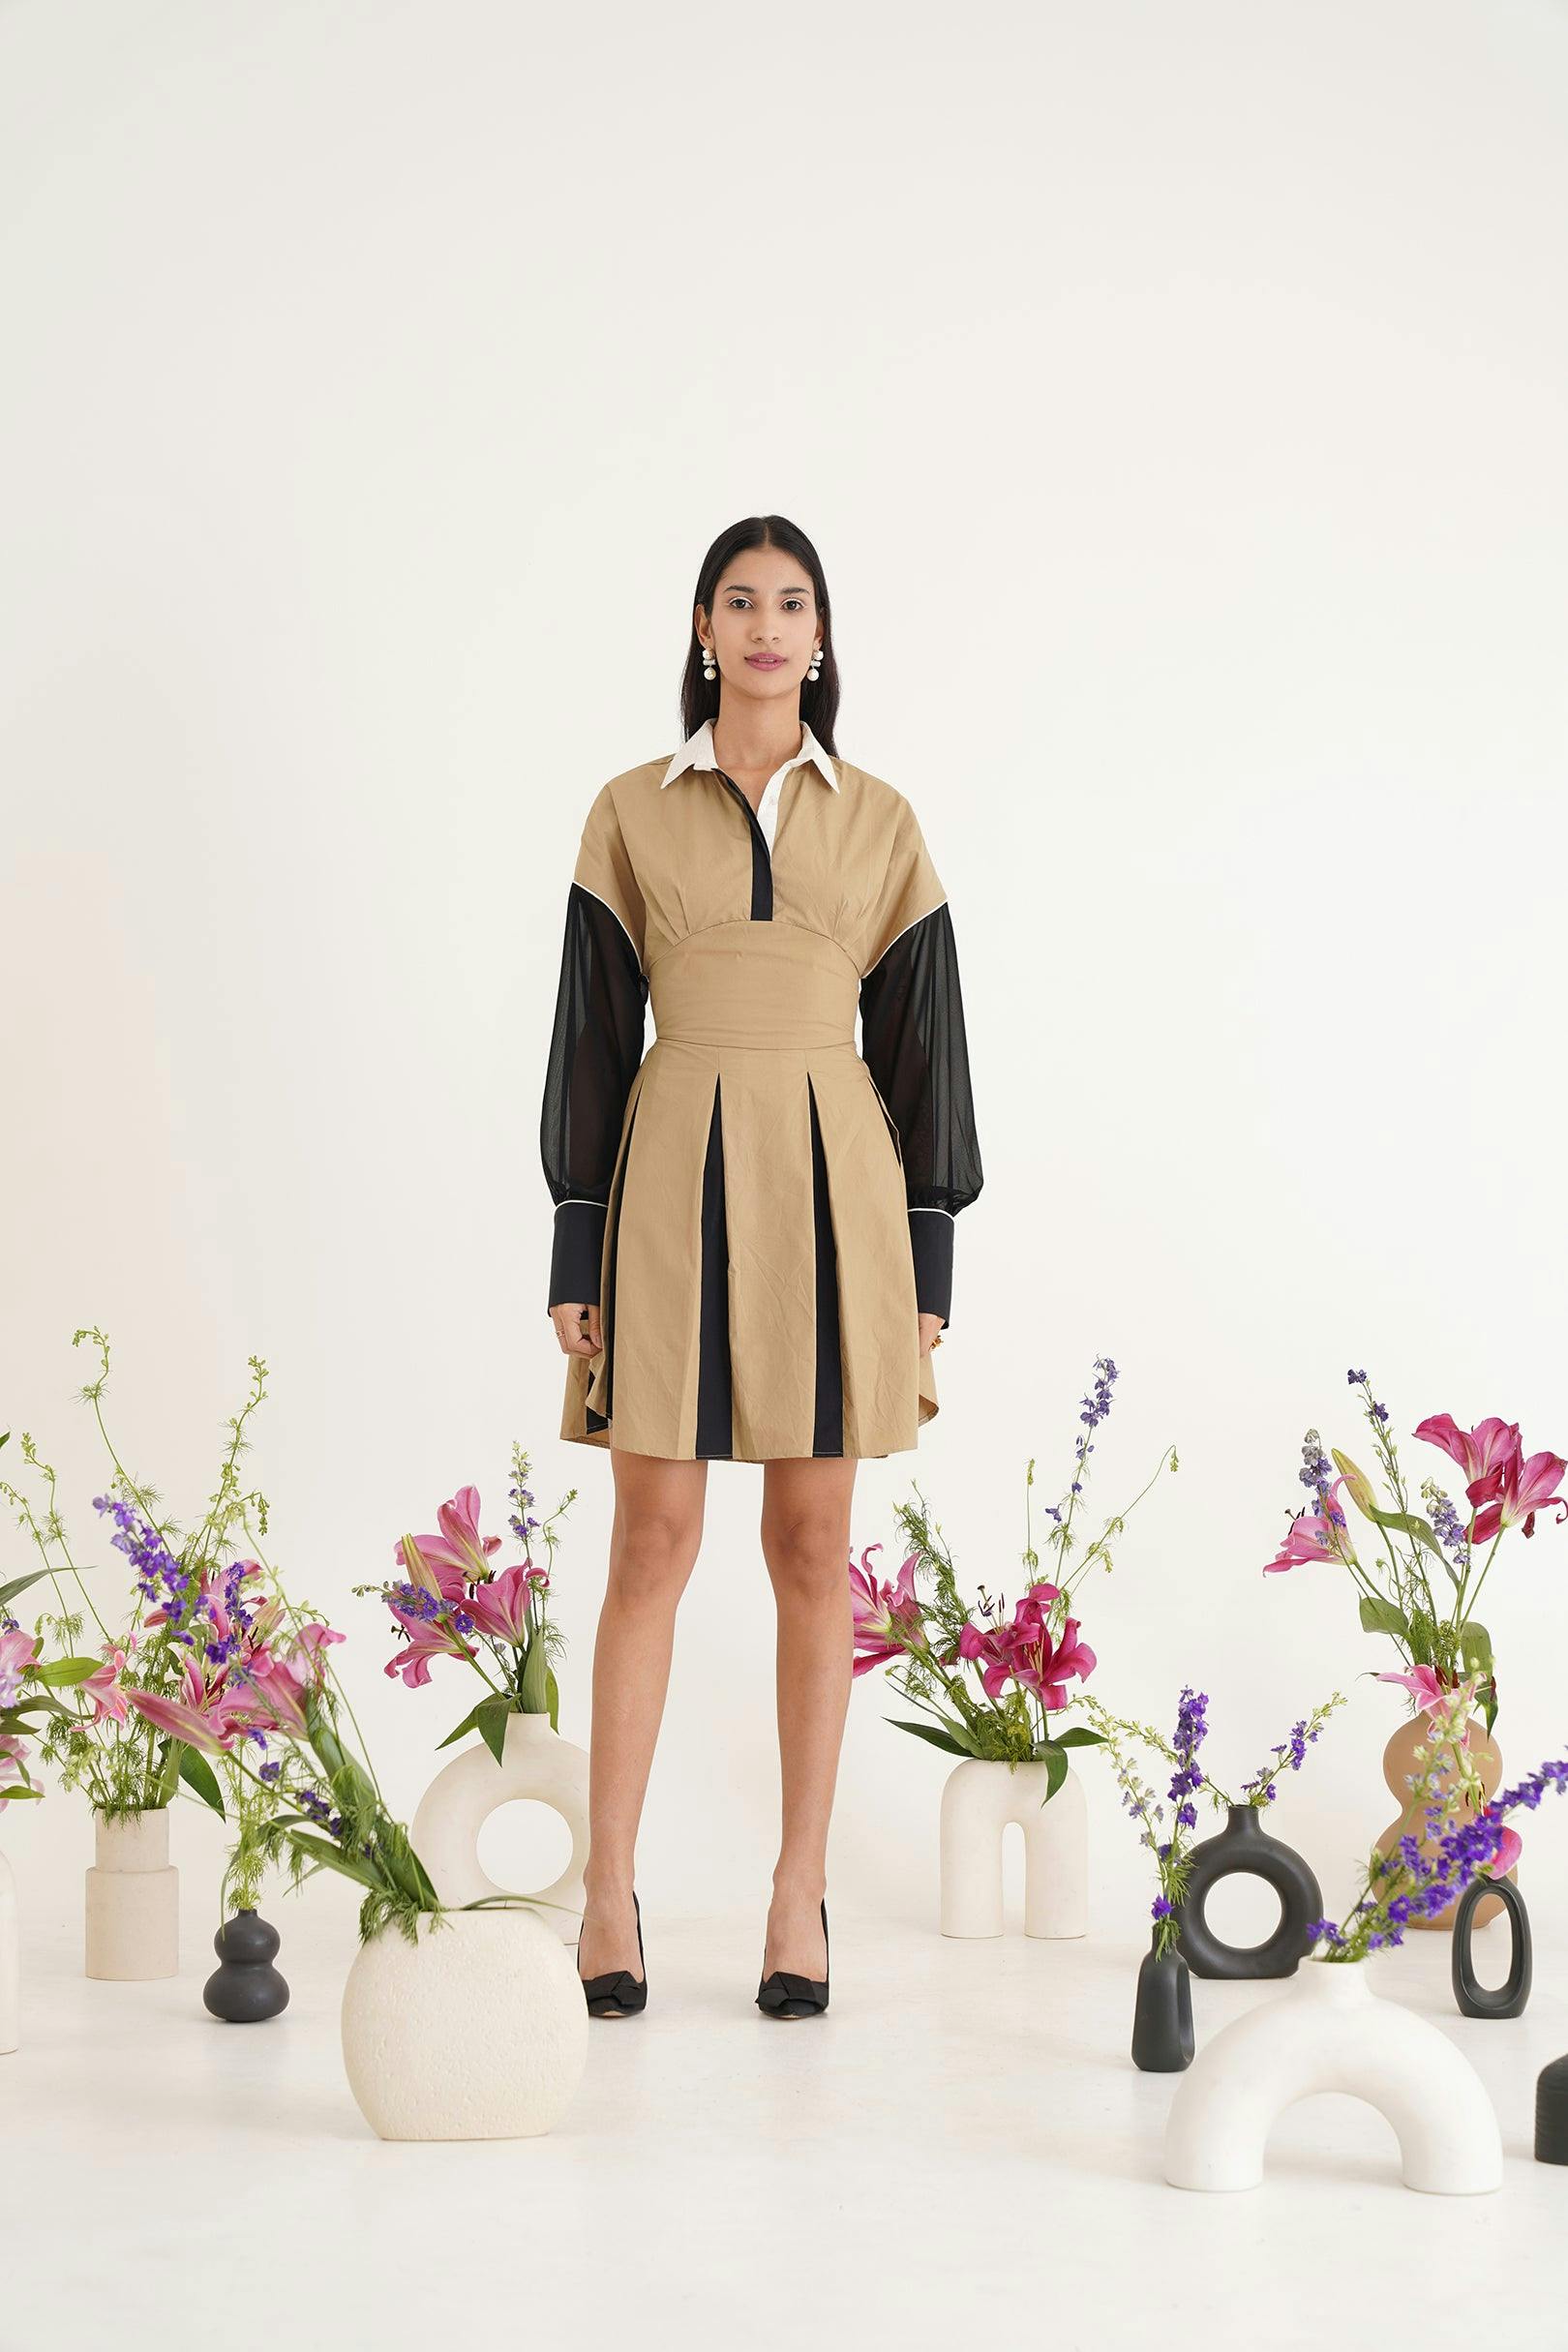 Vaela Dress, a product by Sunandini